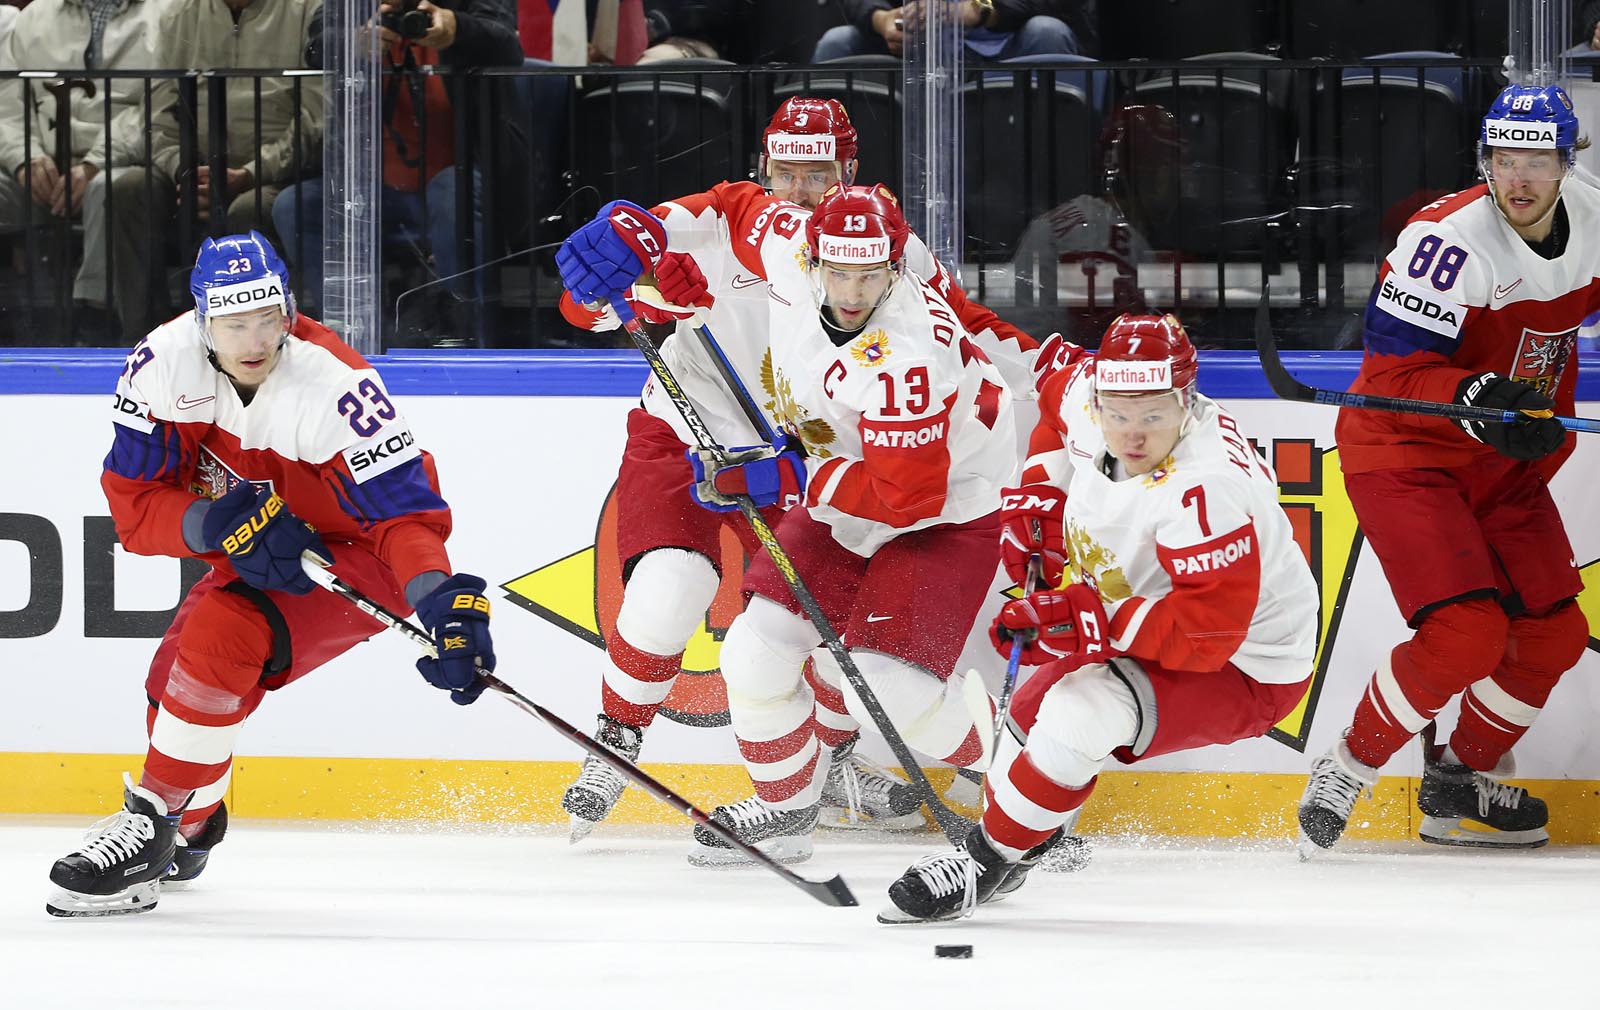 2018 IIHF Ice Hockey World Championship